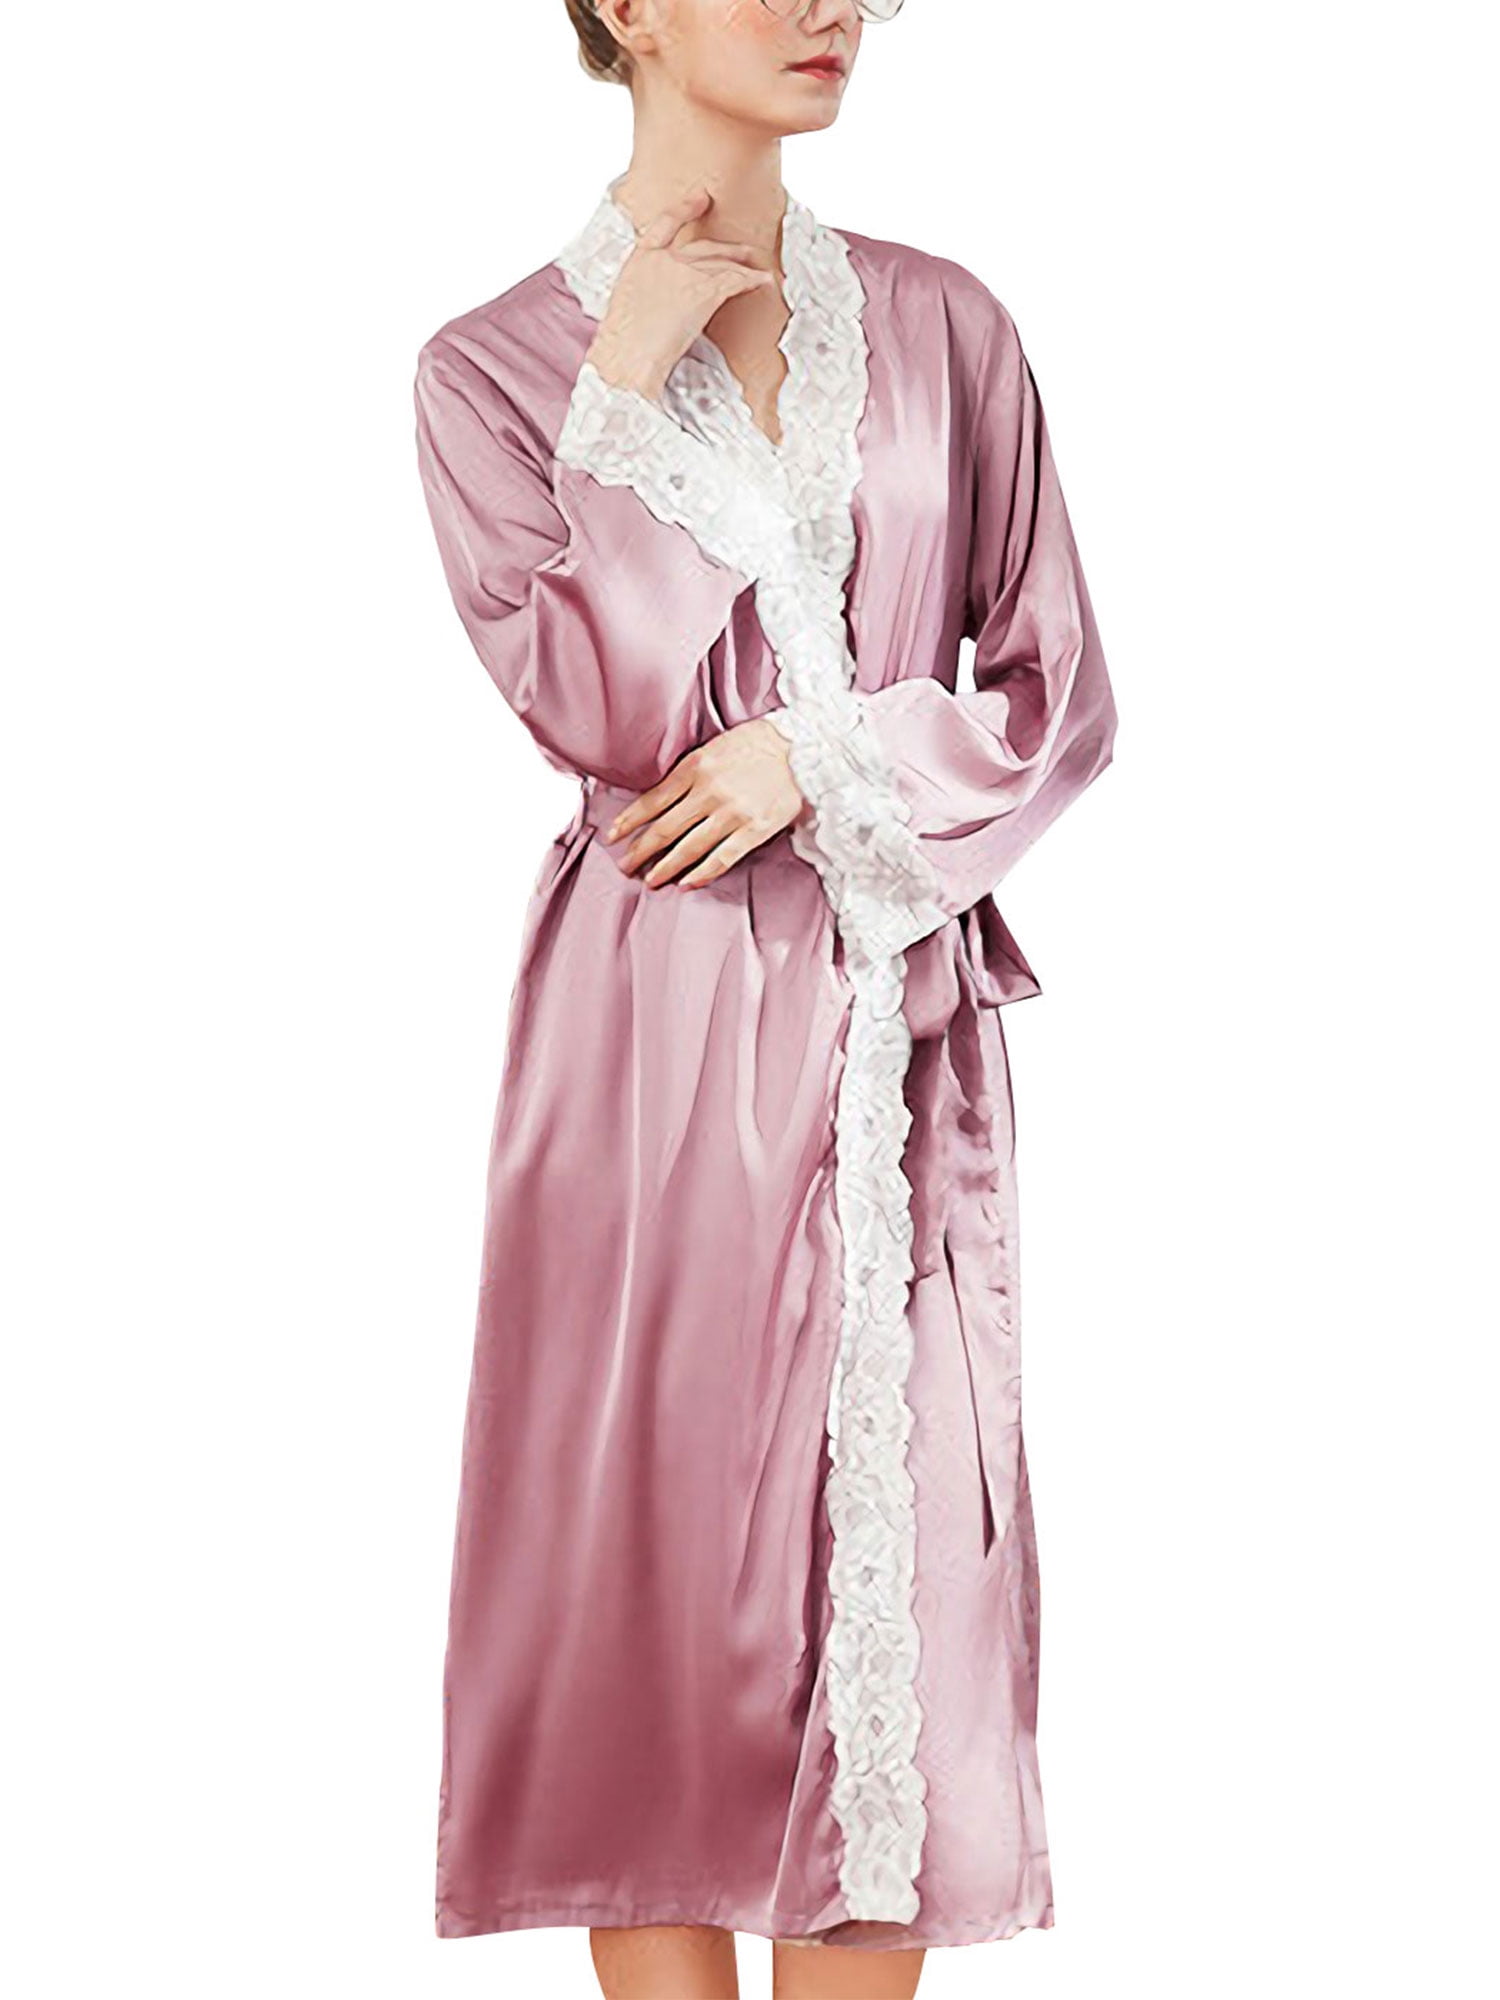 Chase Secret Womens Leopard Print Satin Robes Nocturnal Pajamas Sleepwear Homewear 